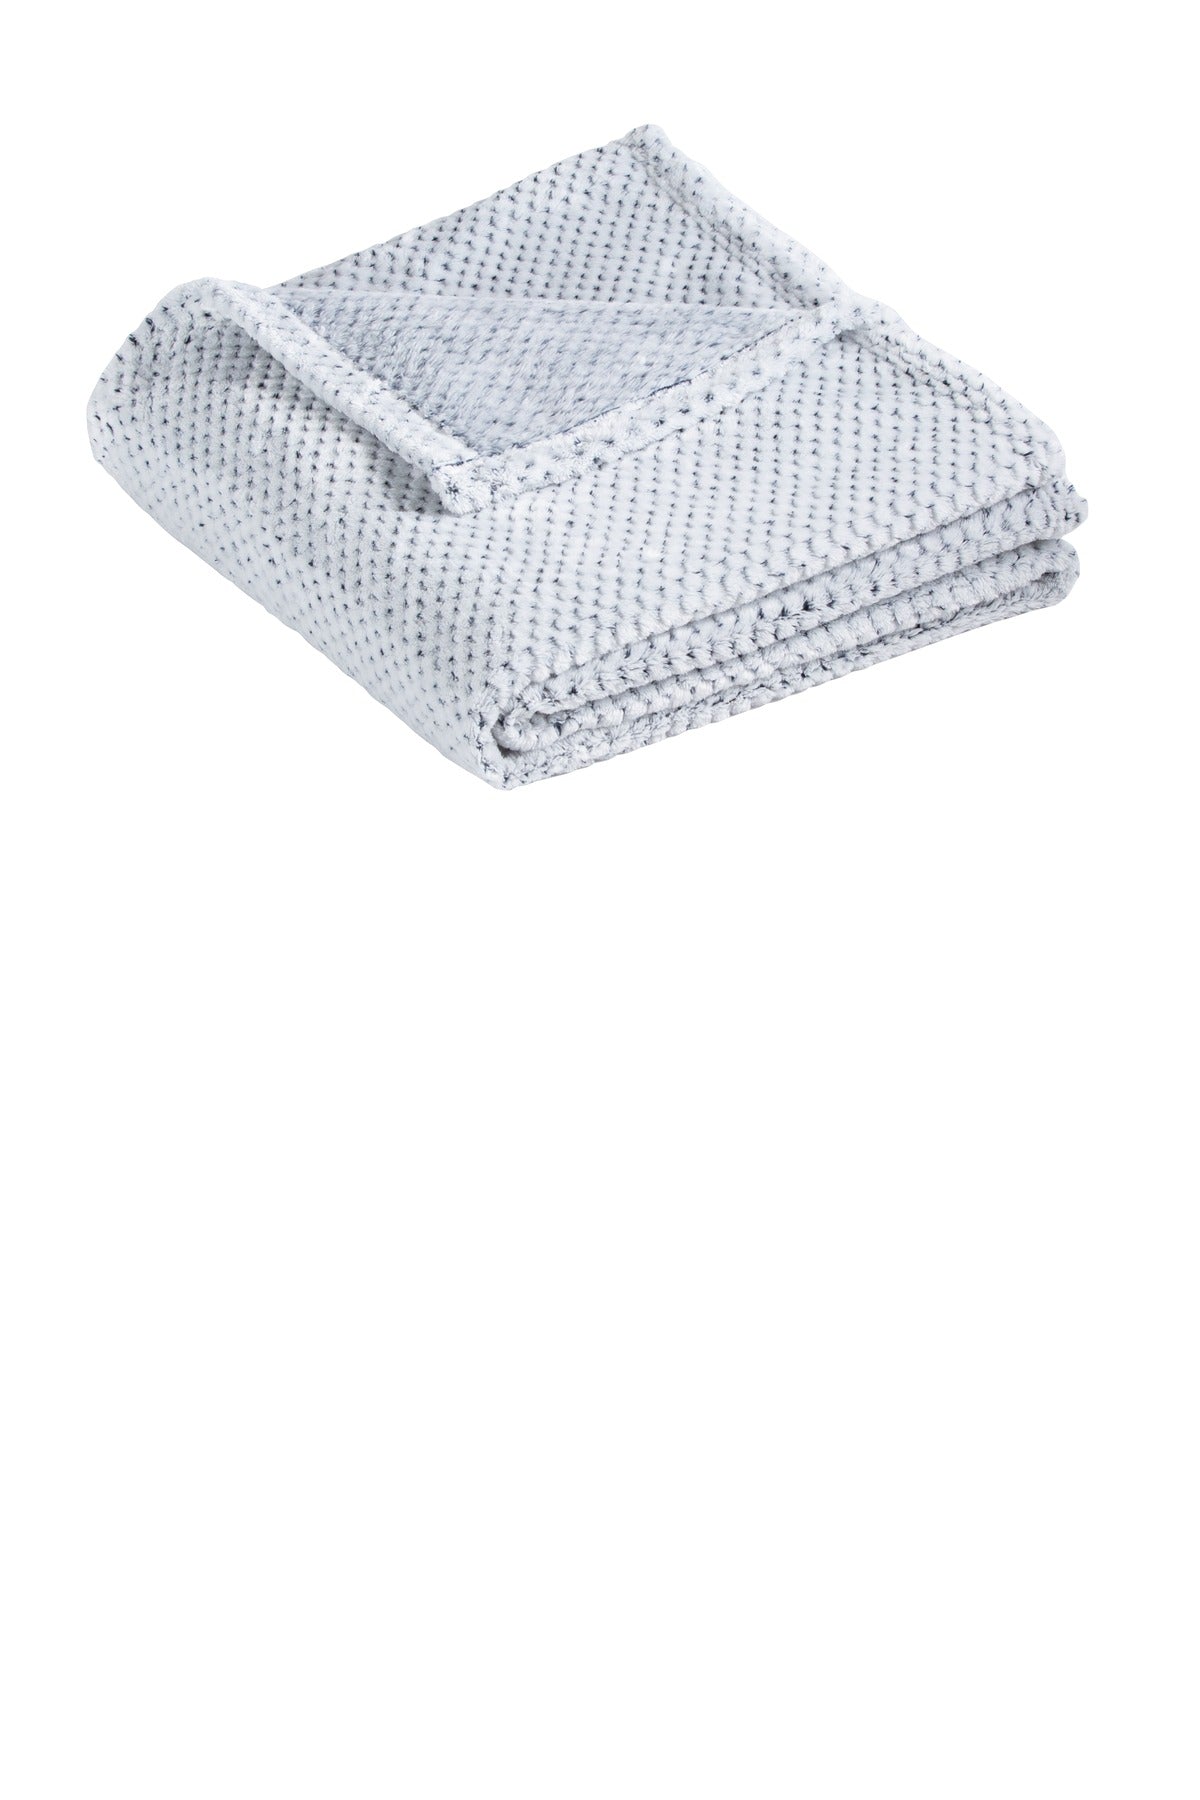 Port Authority ® Plush Texture Blanket. BP35 - DFW Impression